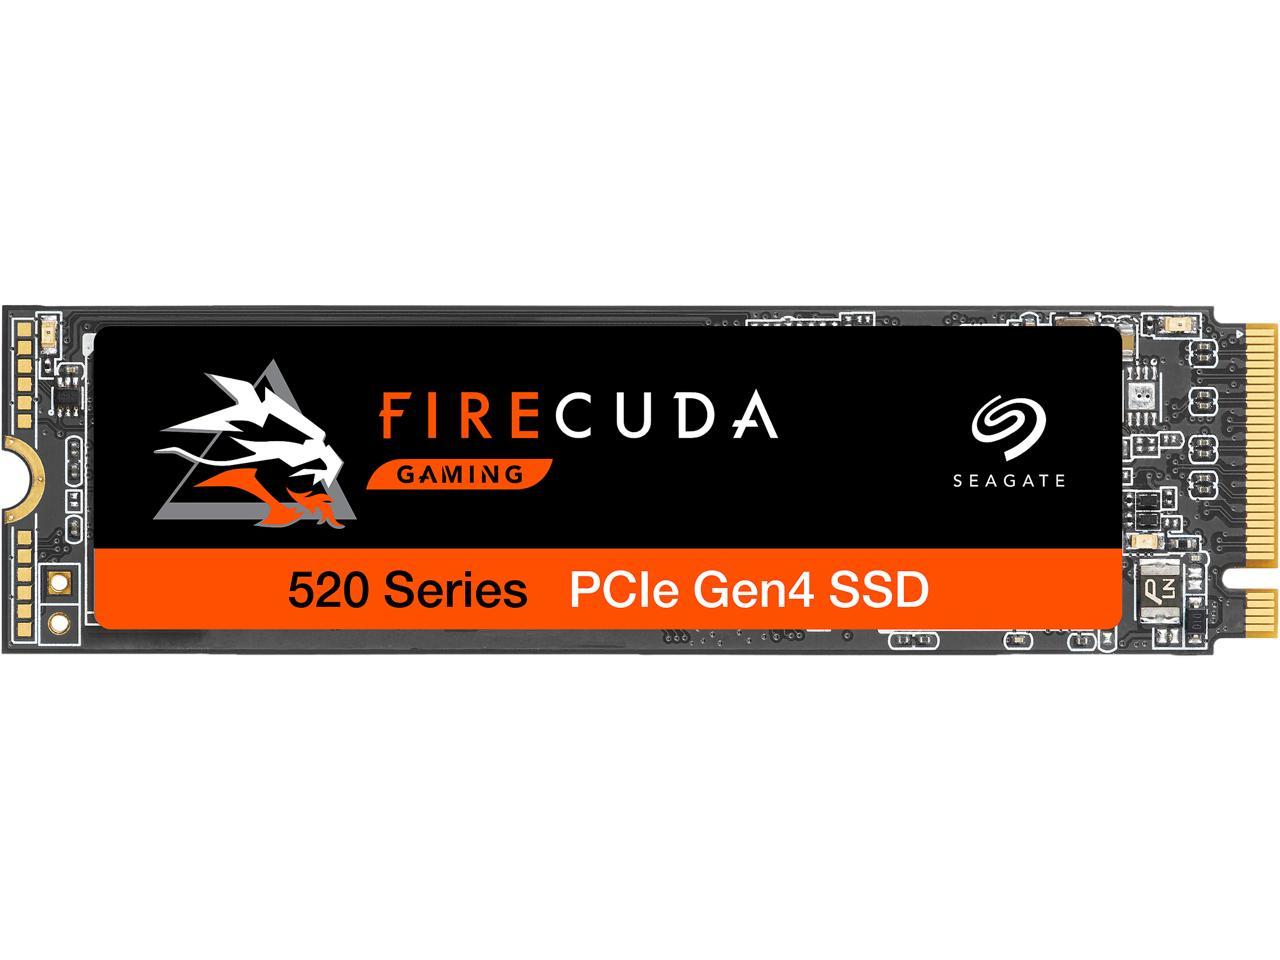 Formand Lydighed lobby Seagate FireCuda 520 M.2 2280 500GB PCIe Internal SSD - Newegg.com